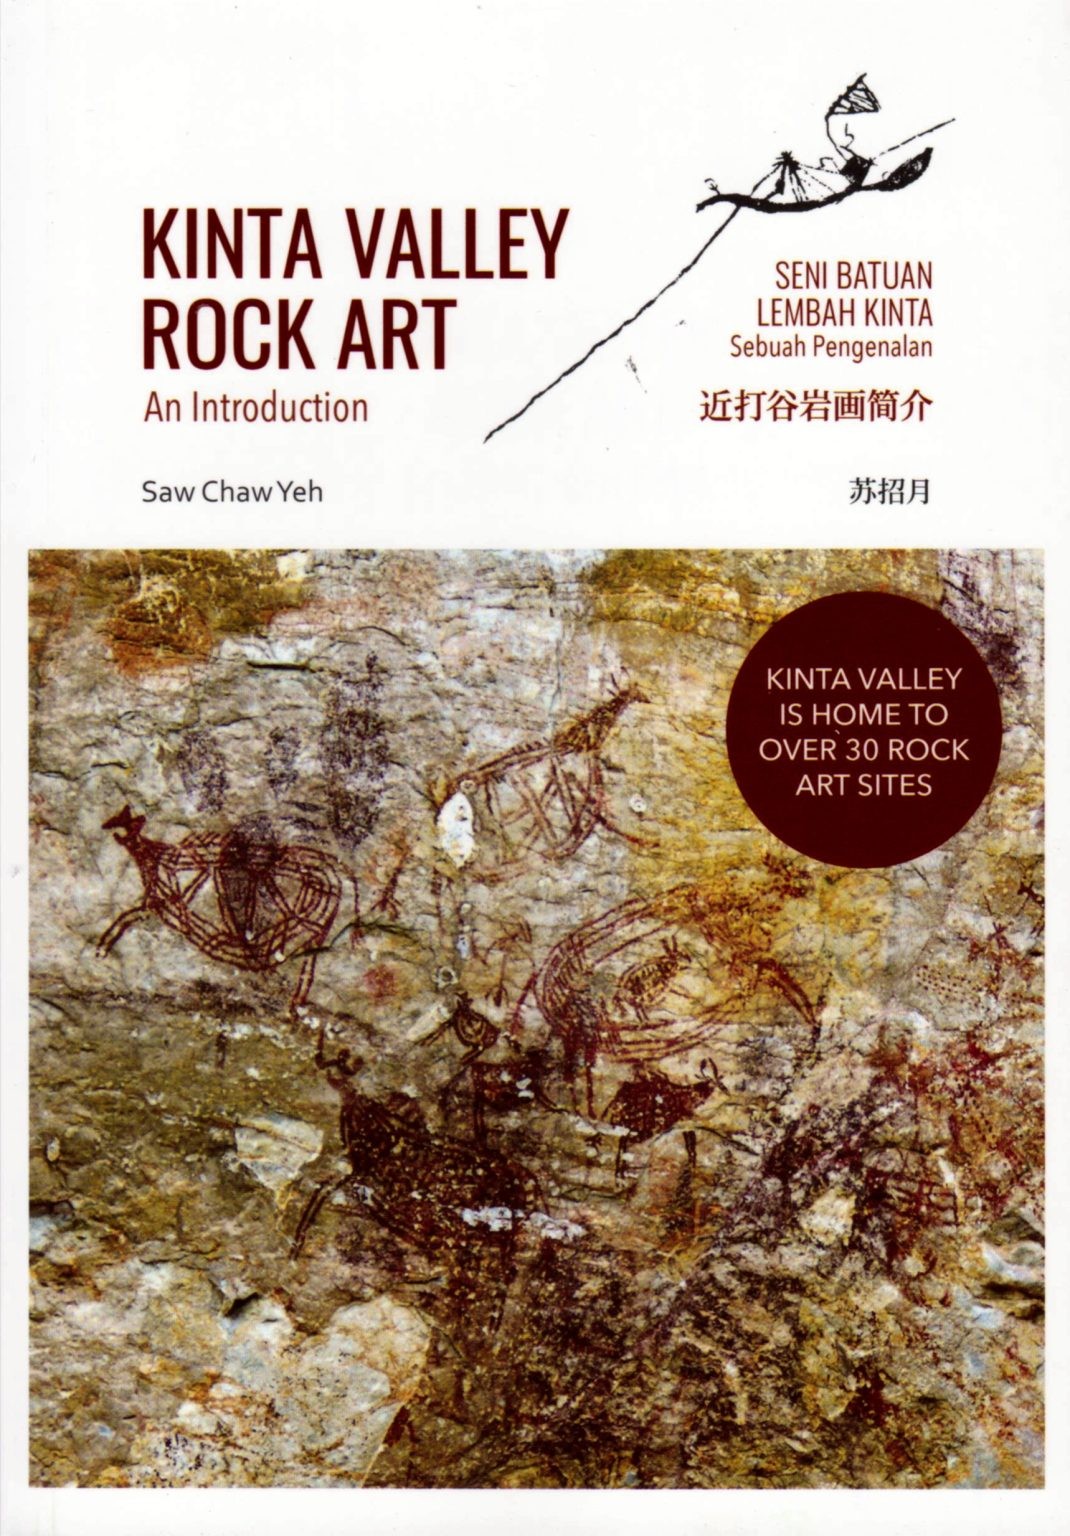 Kinta Valley Rock Art — An Introduction